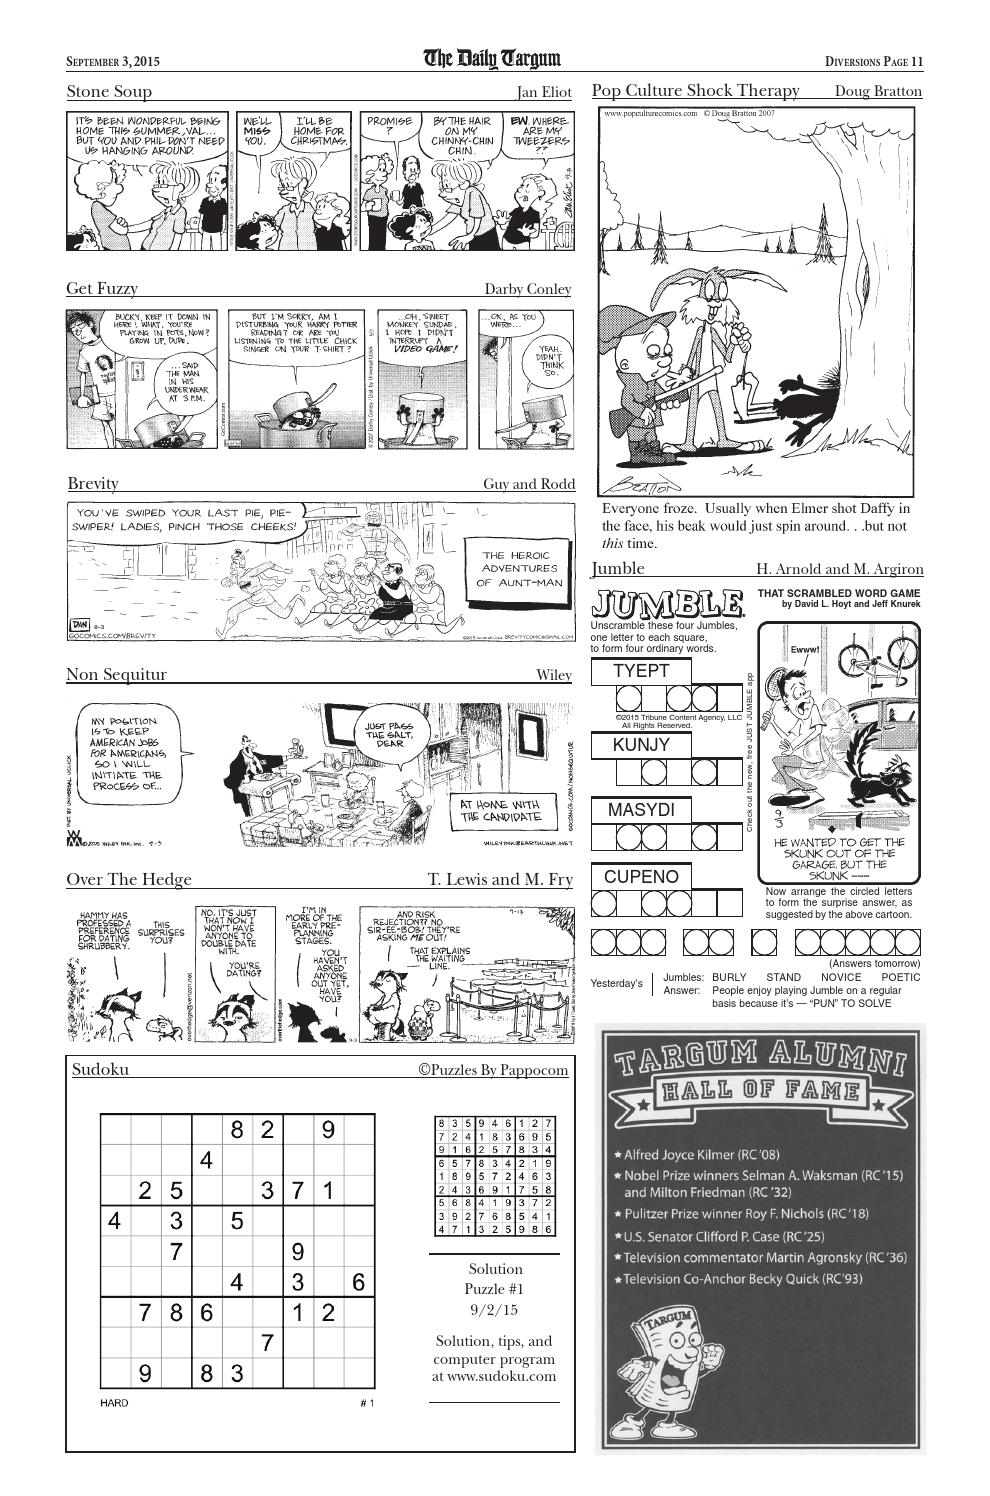 Puzzles by pappocom sudoku